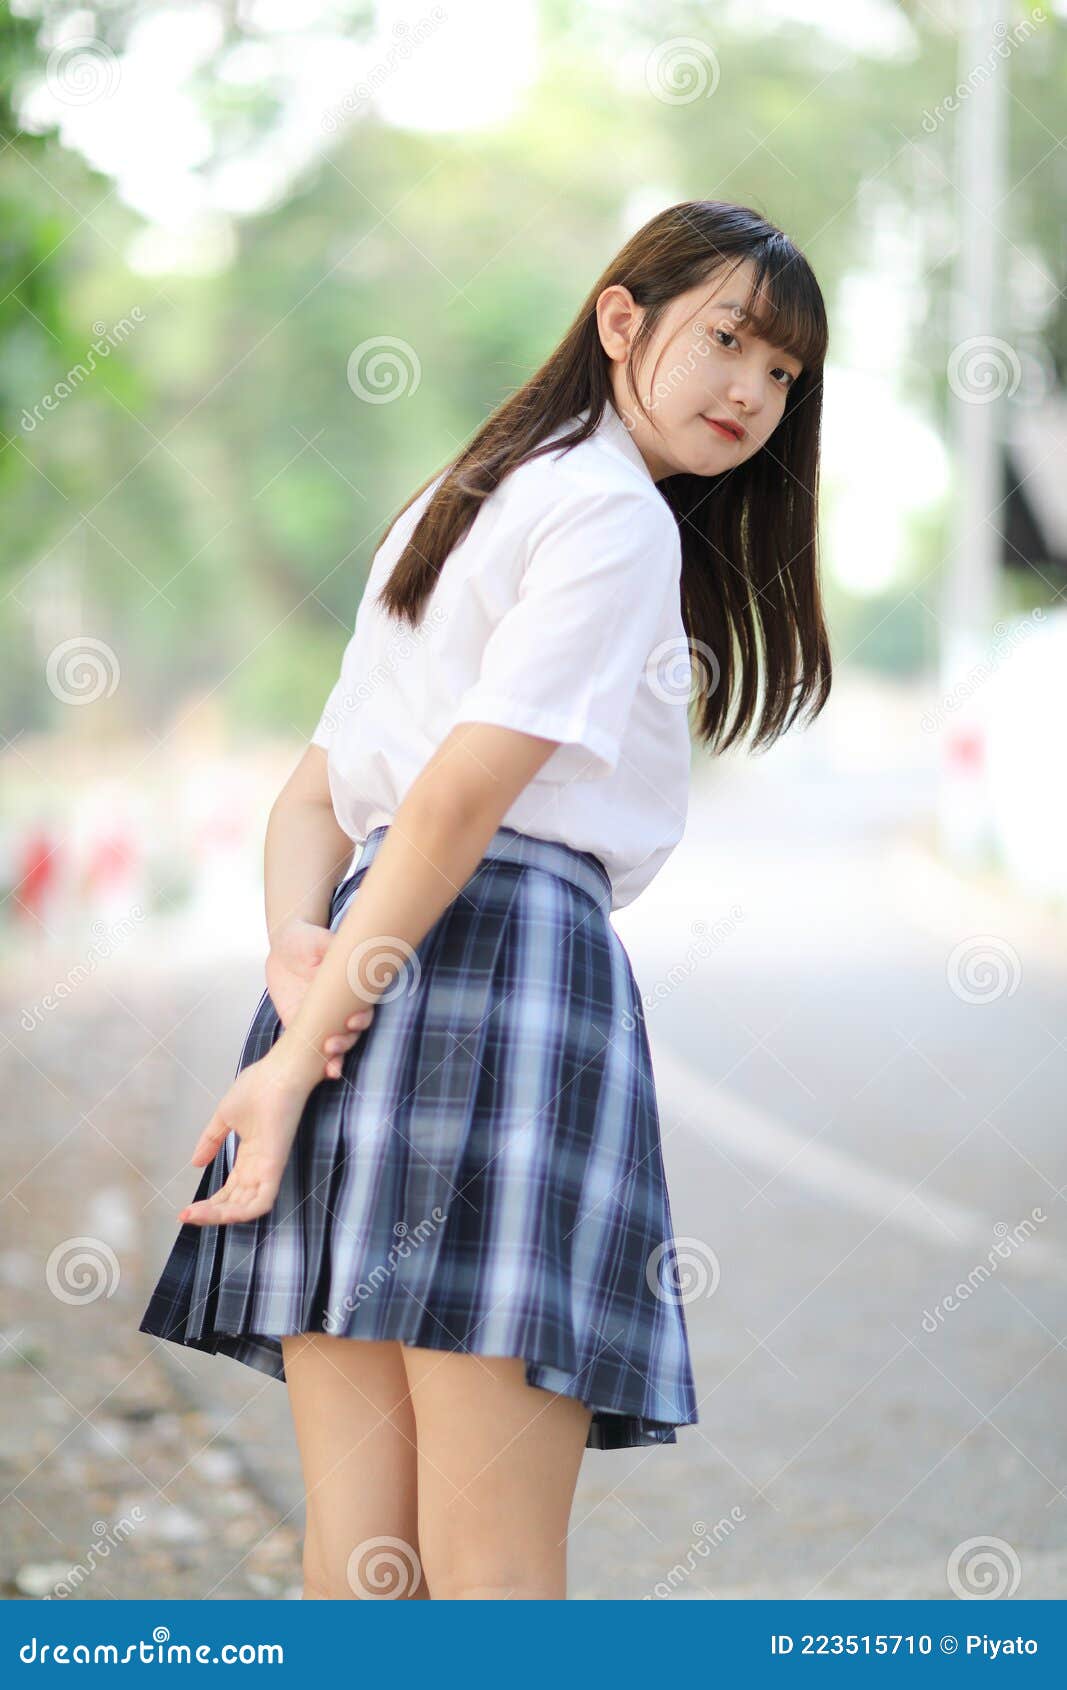 ali alkhazraji recommends japanese school girls photo pic